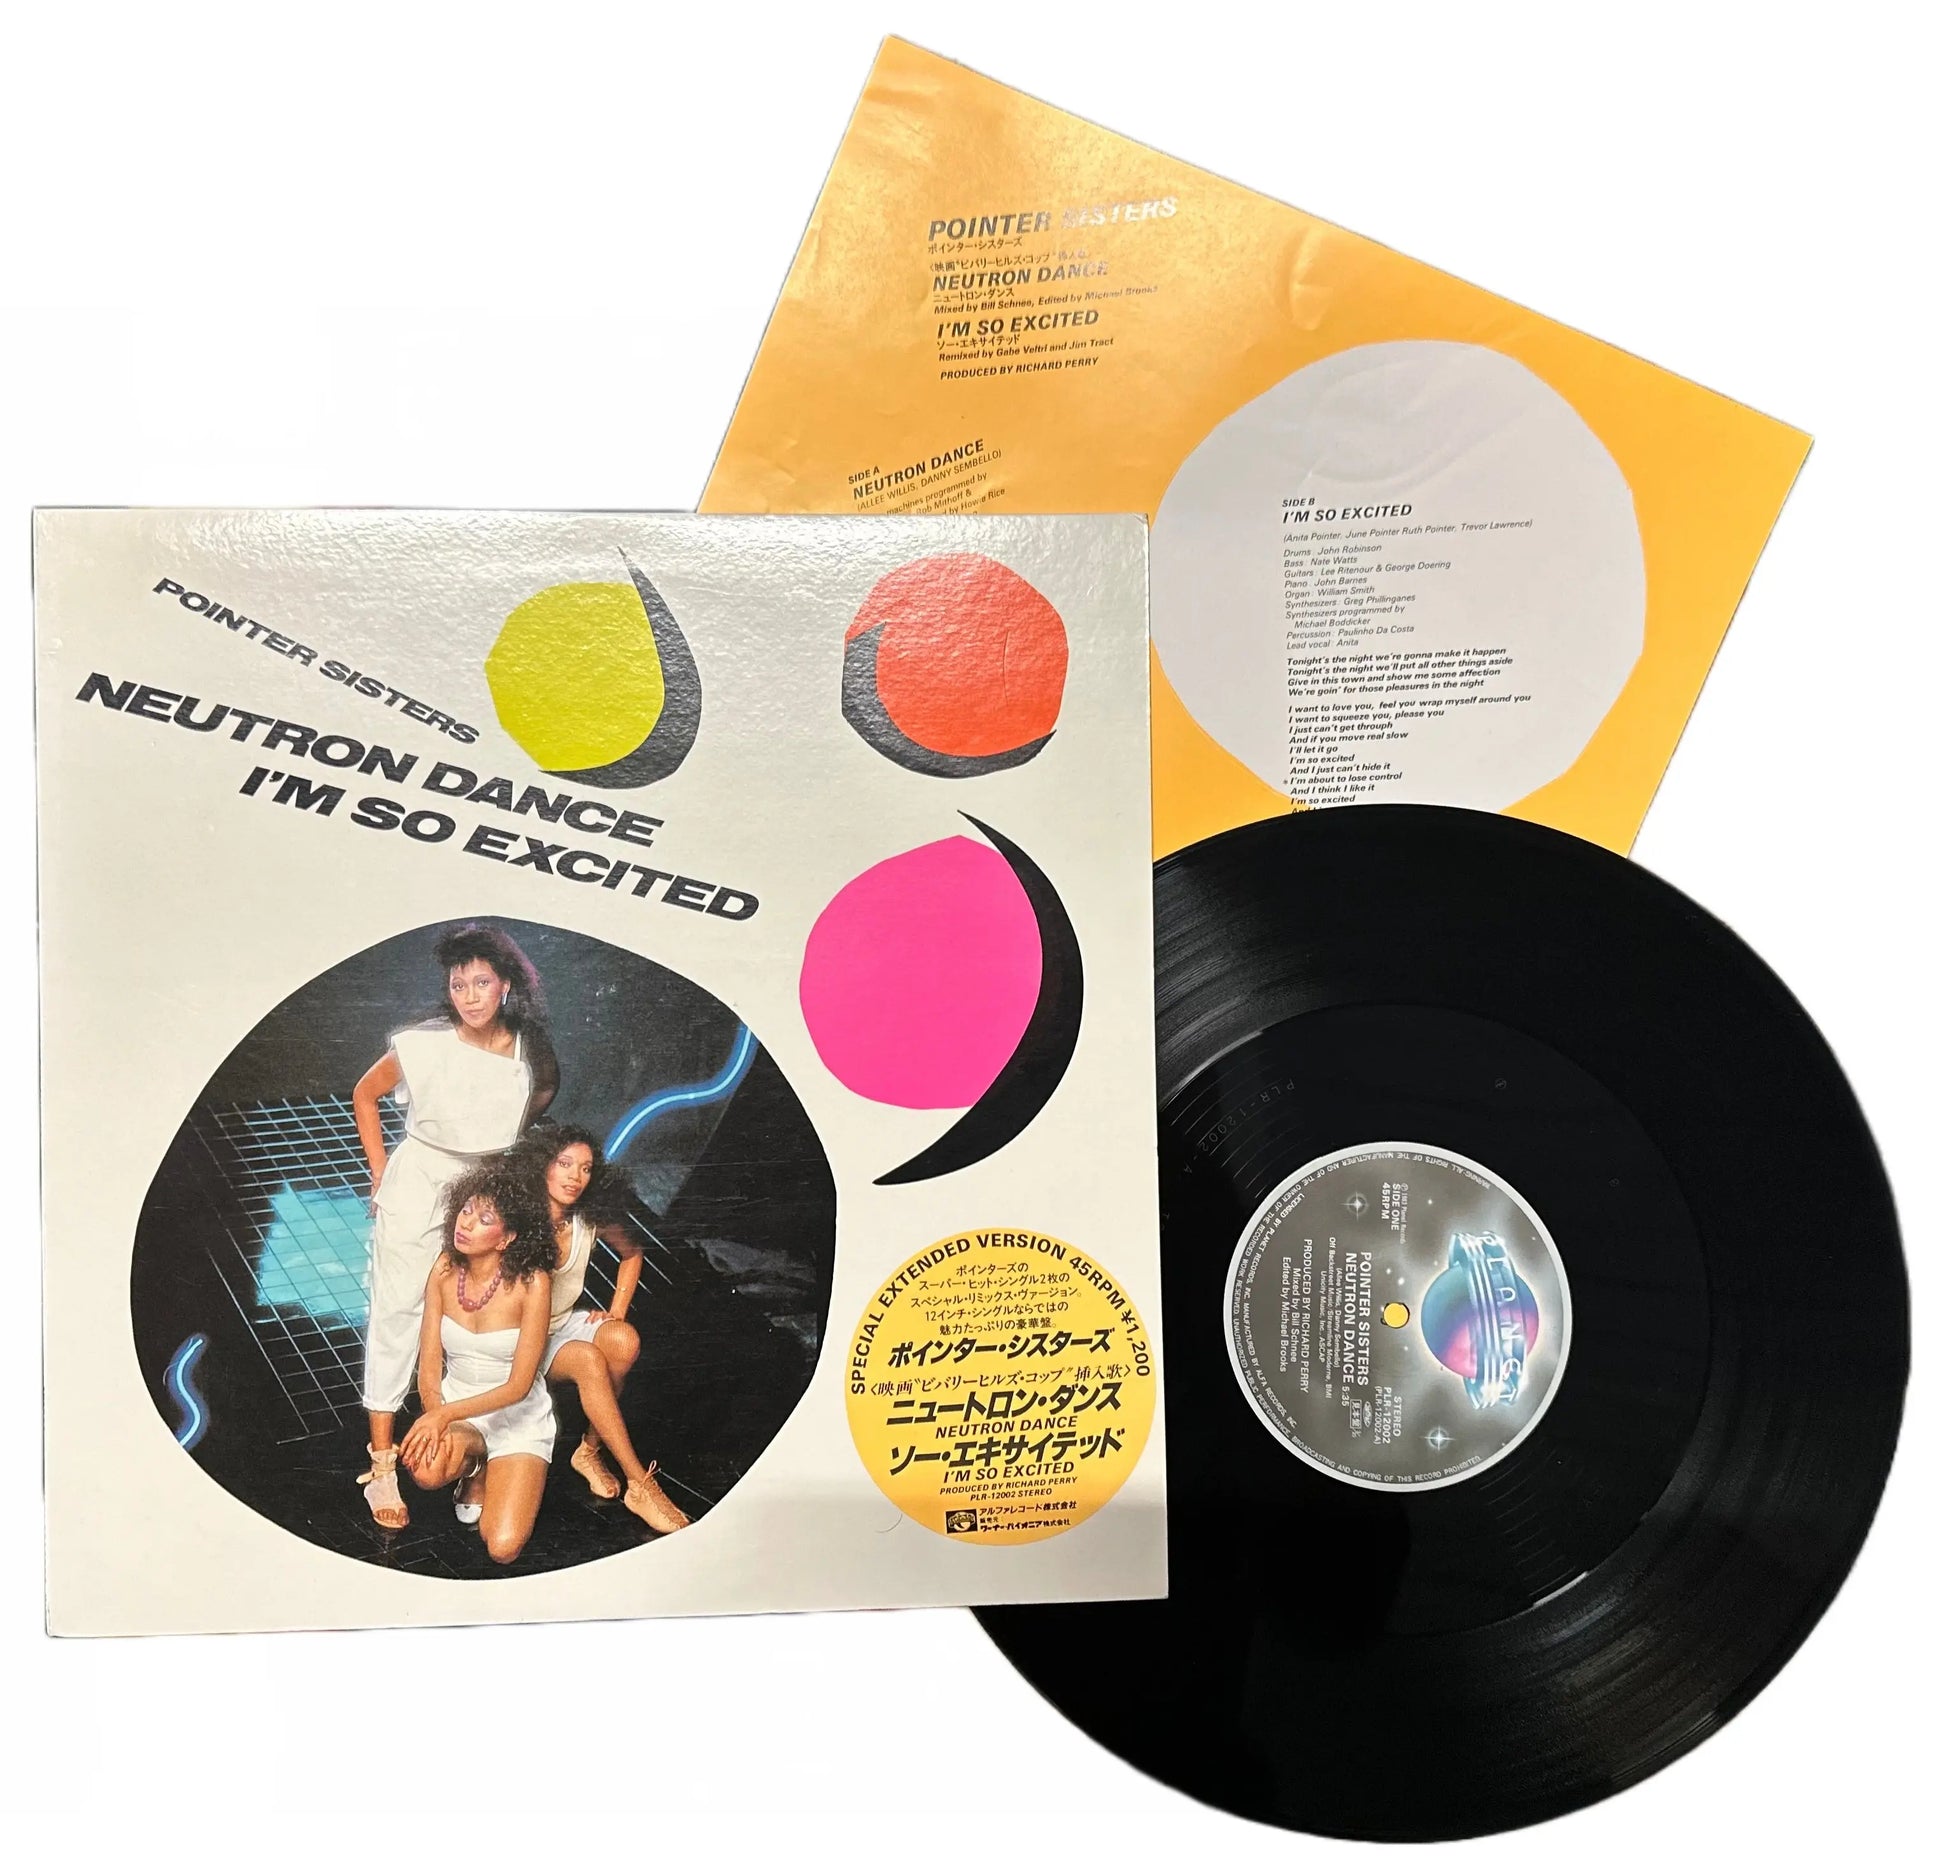 Pointer Sisters - Neutron Dance / I'm So Excited [Original Japanese Pressing Vinyl 12" Single]